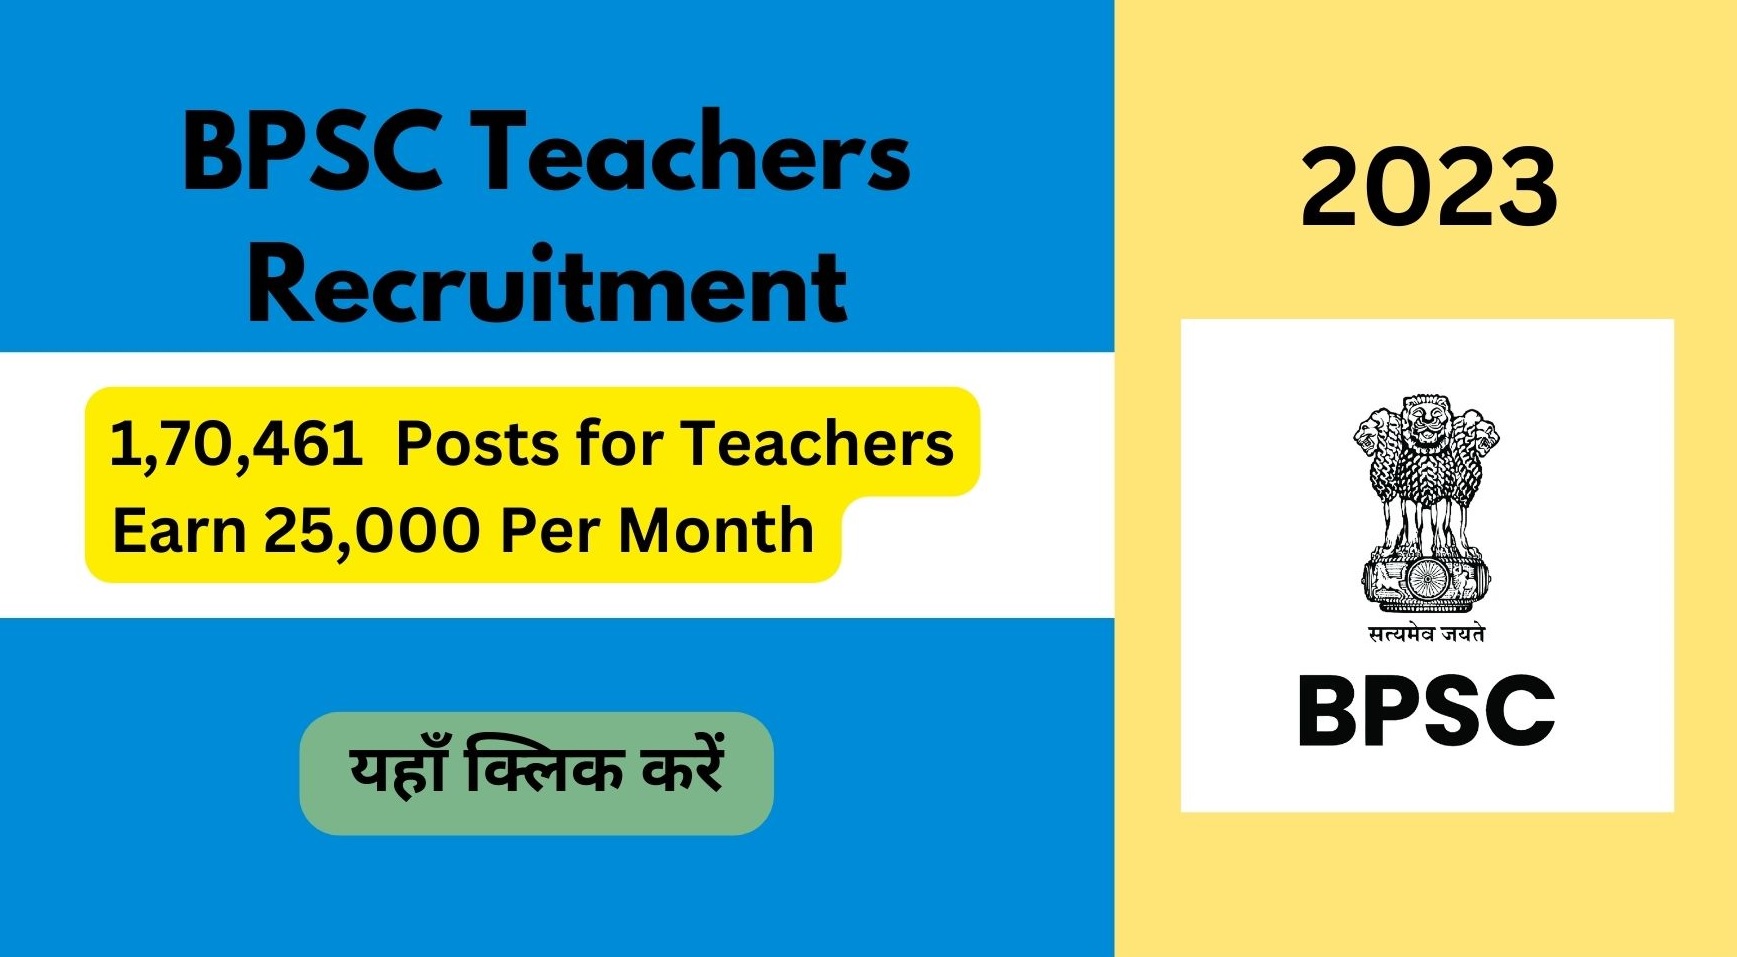 BPSC Teachers Recruitment 2023